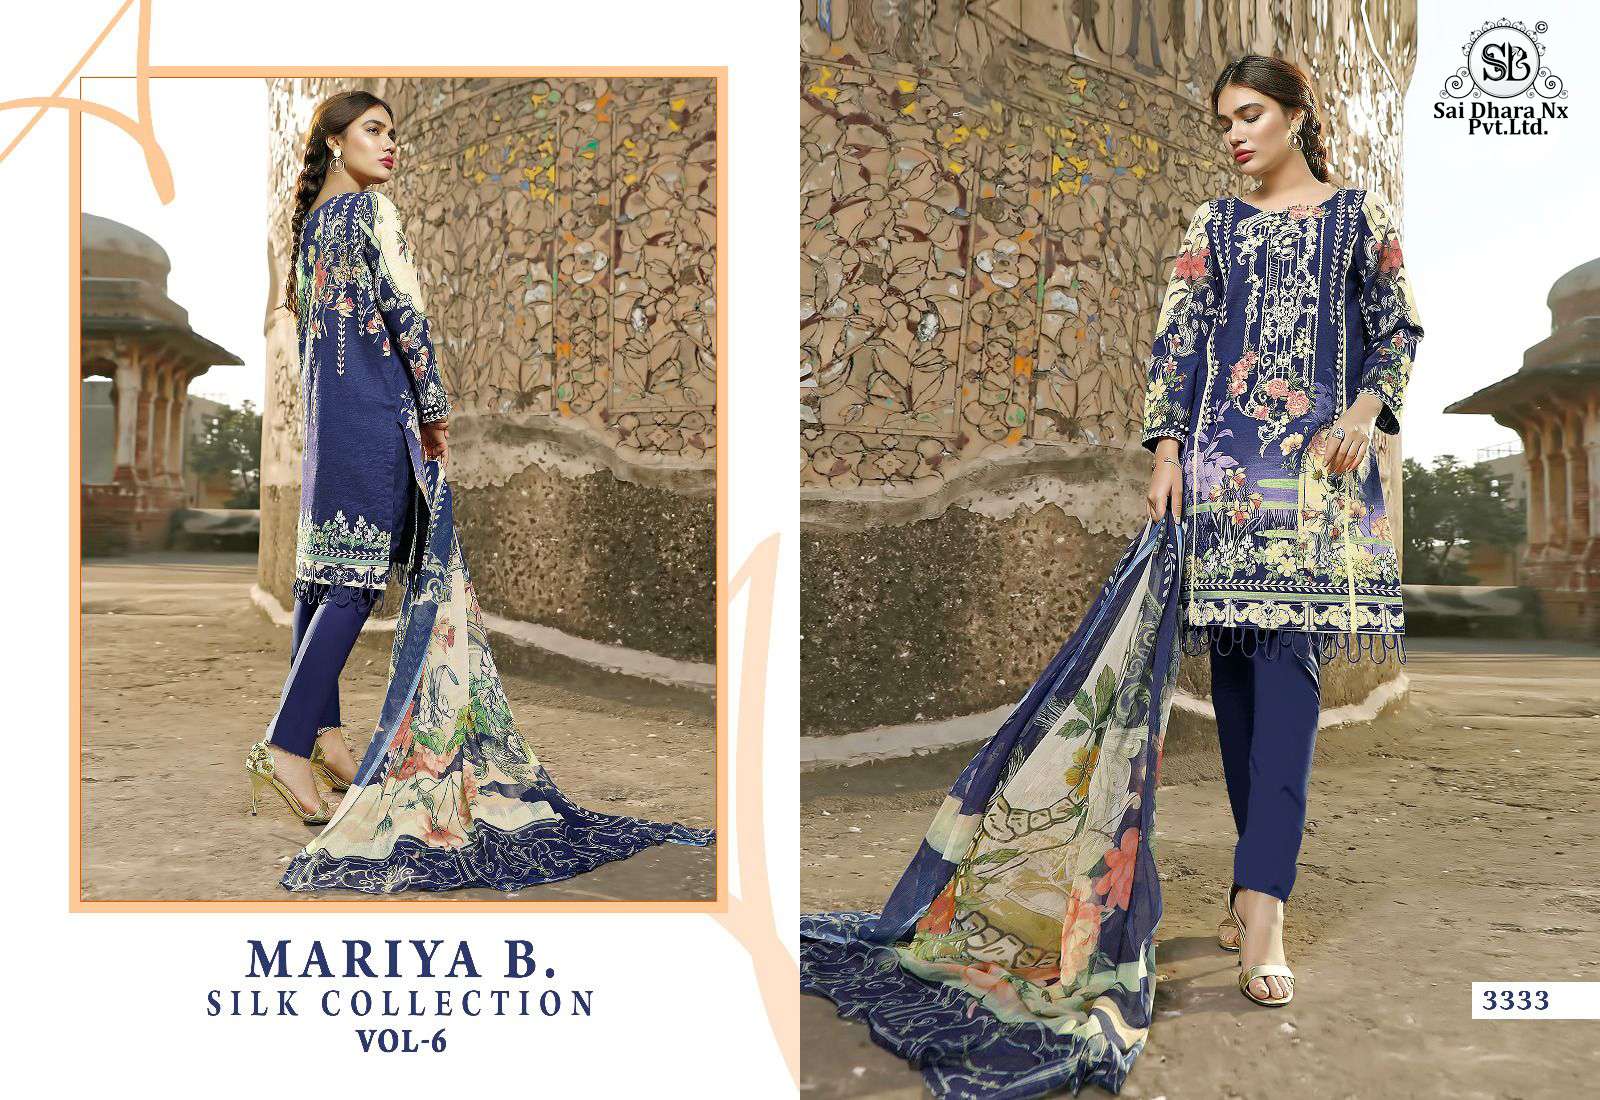 maria b latest silk collection  suit wholesale shop in surat - SaiDharaNx